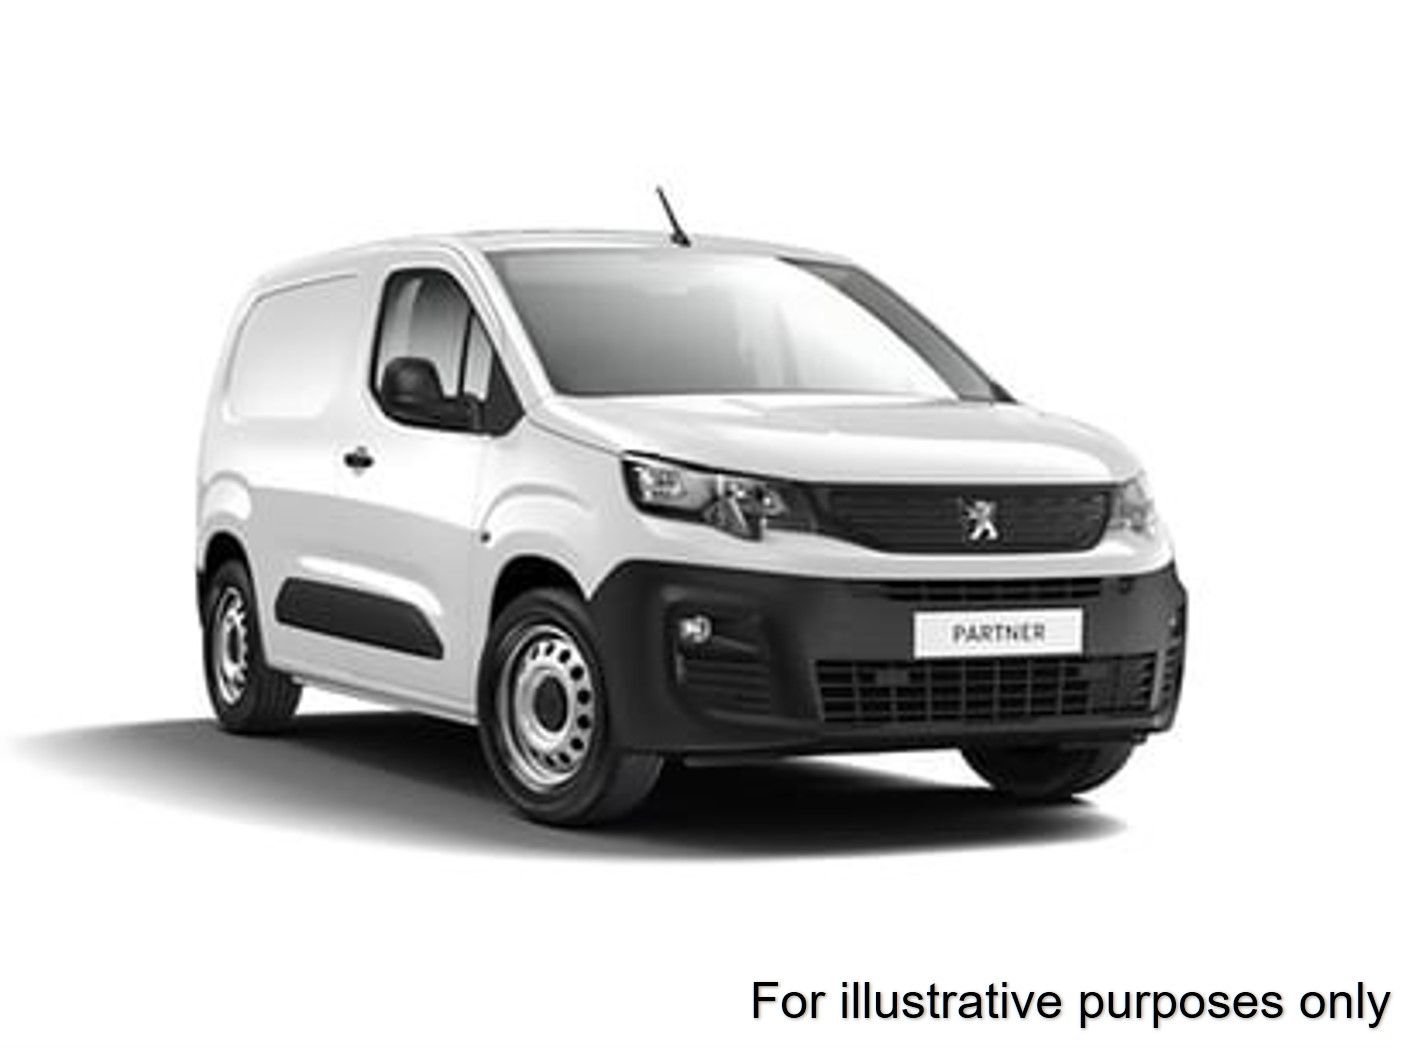 2019 Peugeot Partner 1000 1.5 Bluehdi 100 Professional Van (NV19WOH)